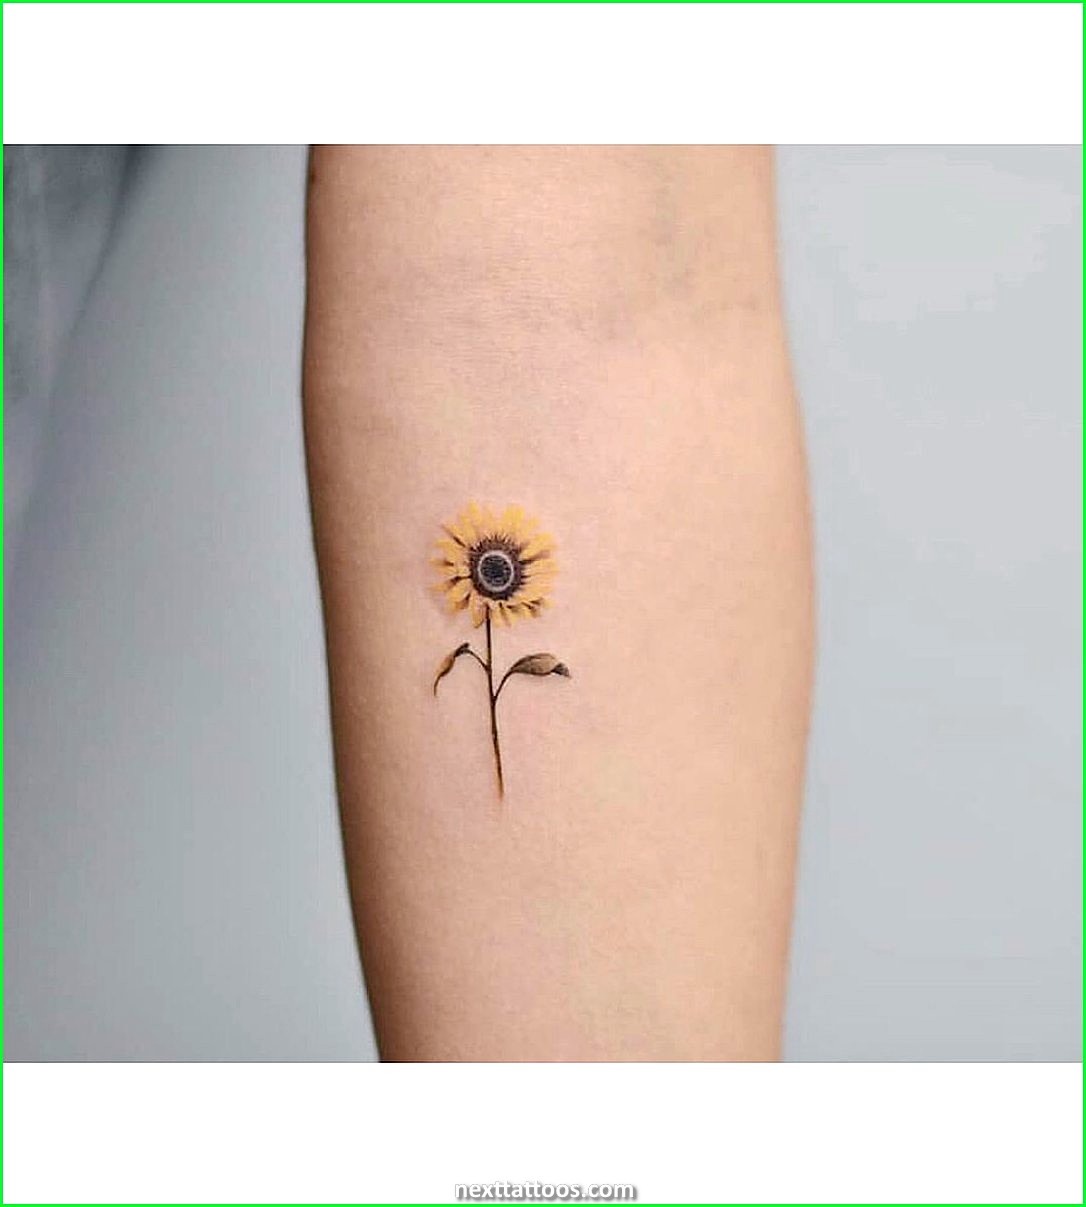 Cute Nature Tattoos - How to Choose Cute Small Nature Tattoos